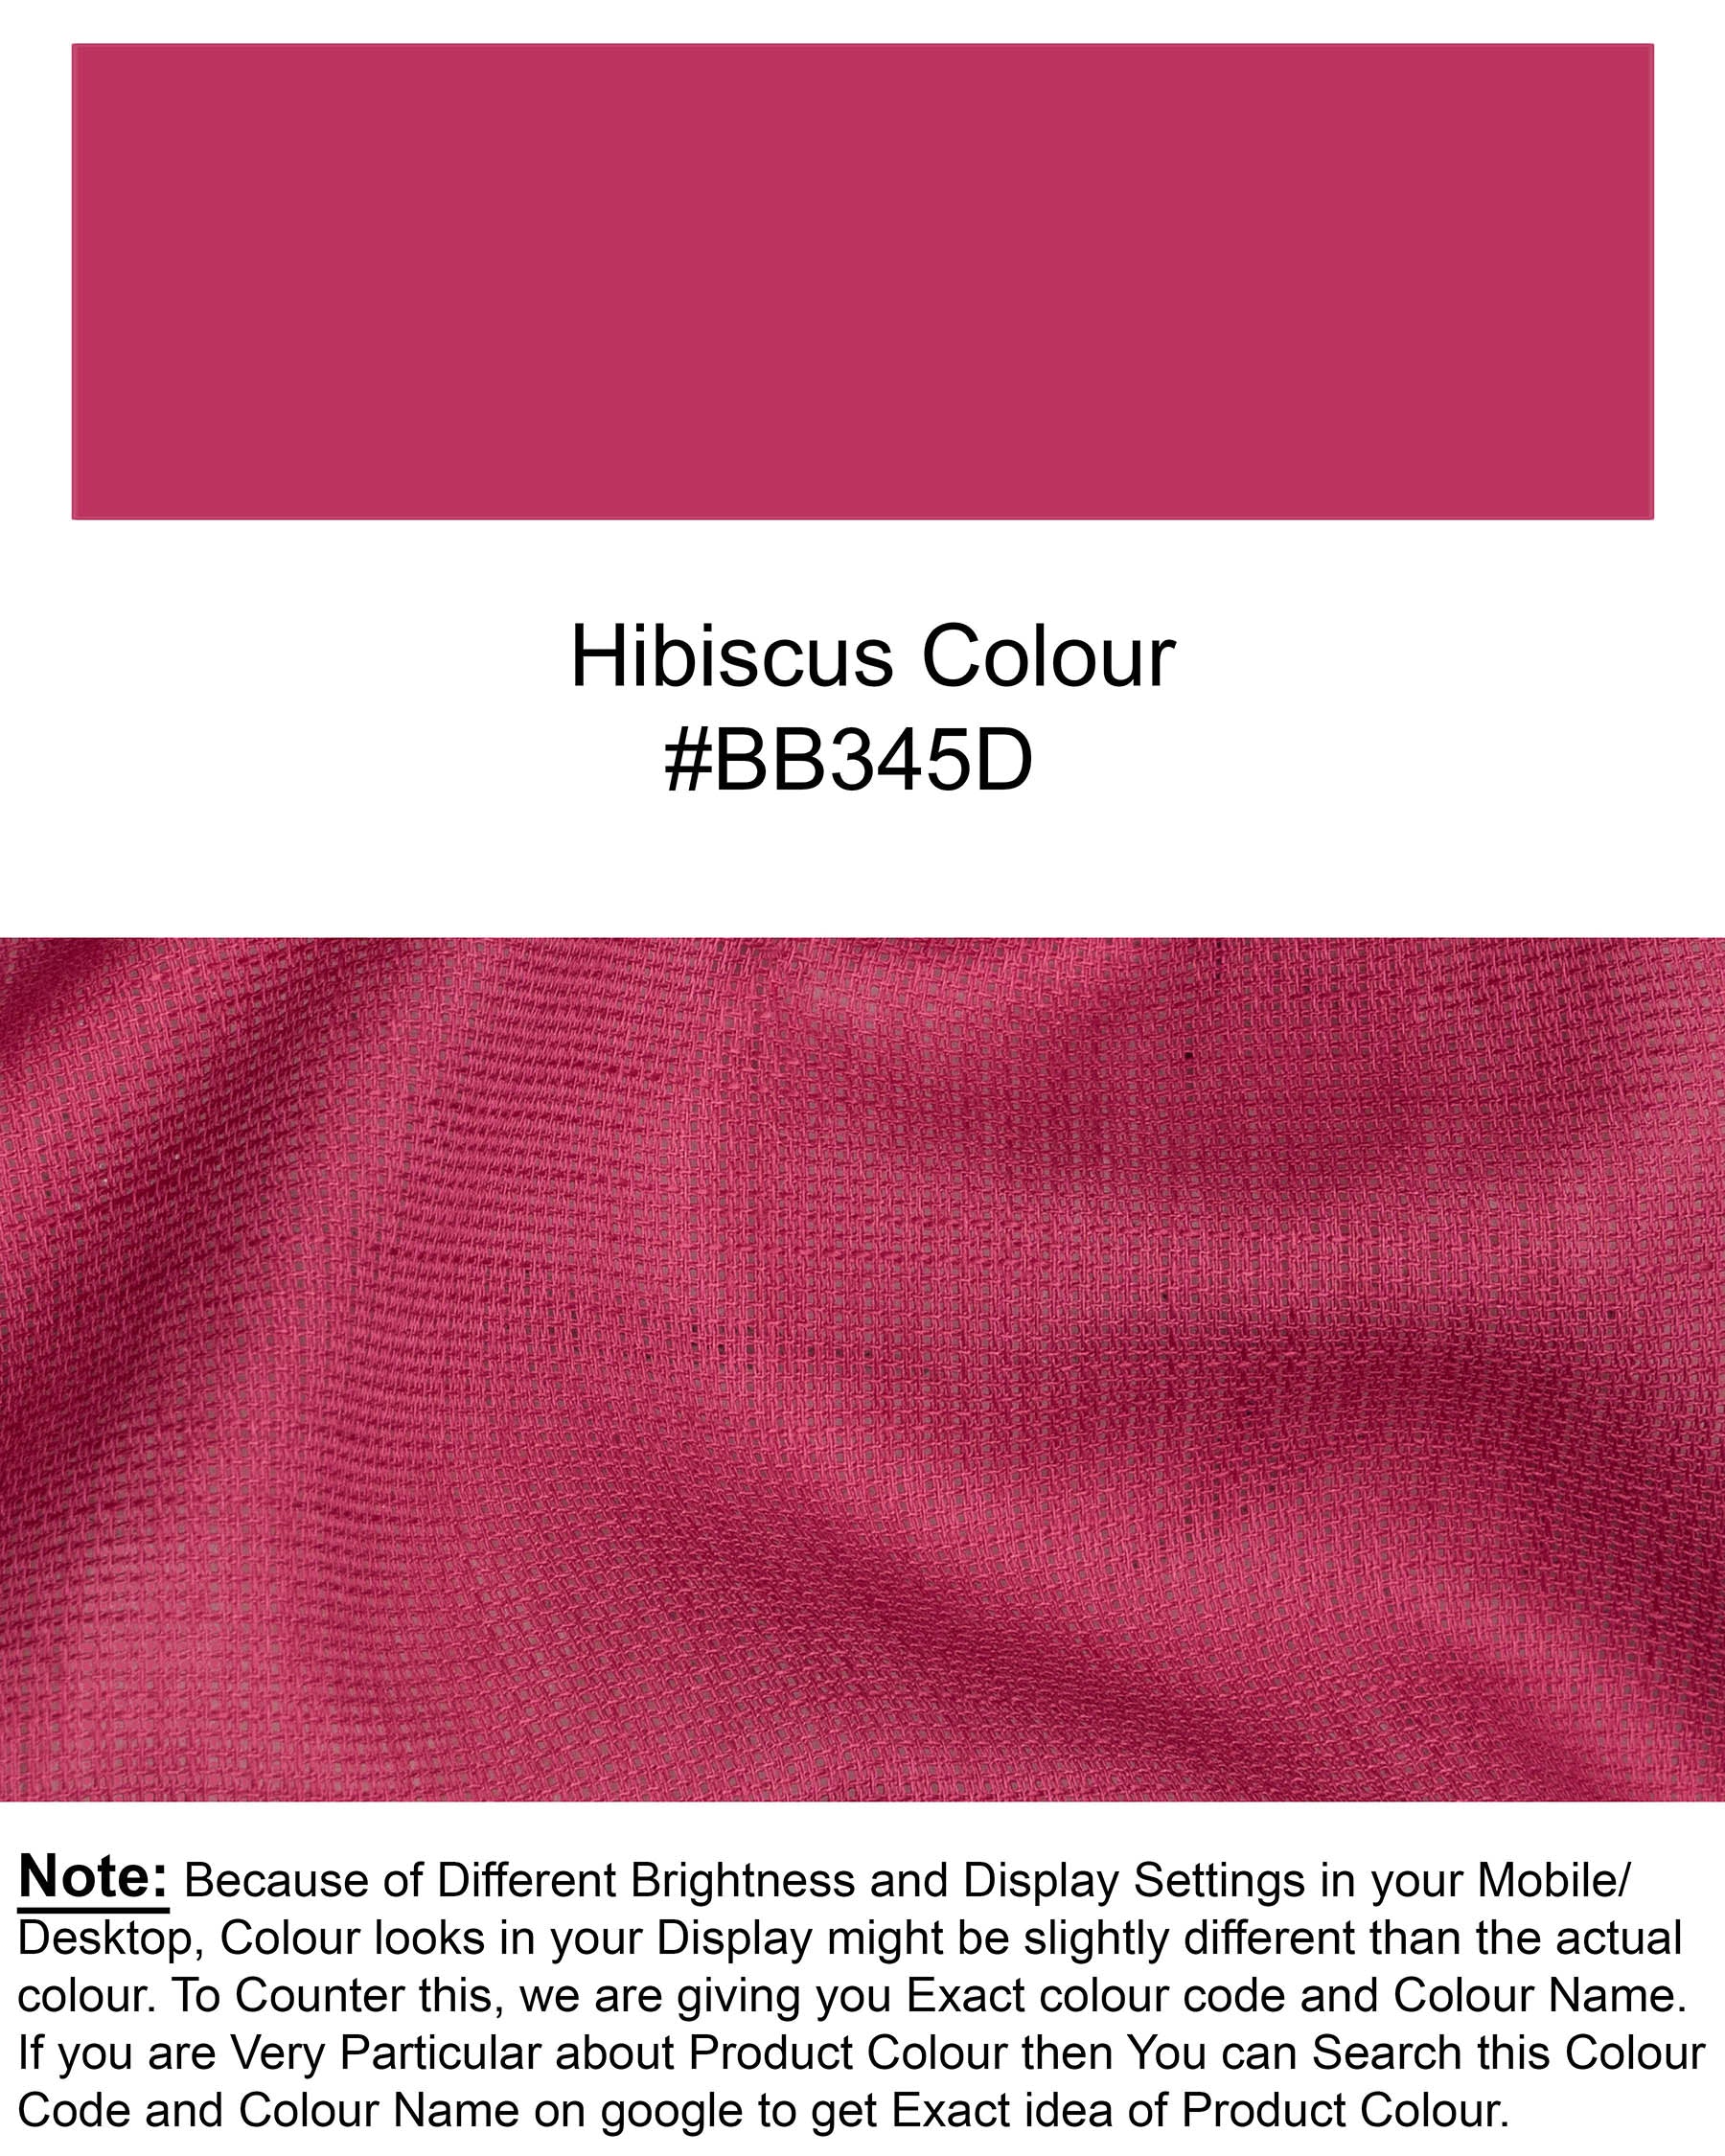 Hibiscus Dobby Textured Premium Giza Cotton Shirt 5982-BD-BLK-38, 5982-BD-BLK-H-38, 5982-BD-BLK-39, 5982-BD-BLK-H-39, 5982-BD-BLK-40, 5982-BD-BLK-H-40, 5982-BD-BLK-42, 5982-BD-BLK-H-42, 5982-BD-BLK-44, 5982-BD-BLK-H-44, 5982-BD-BLK-46, 5982-BD-BLK-H-46, 5982-BD-BLK-48, 5982-BD-BLK-H-48, 5982-BD-BLK-50, 5982-BD-BLK-H-50, 5982-BD-BLK-52, 5982-BD-BLK-H-52